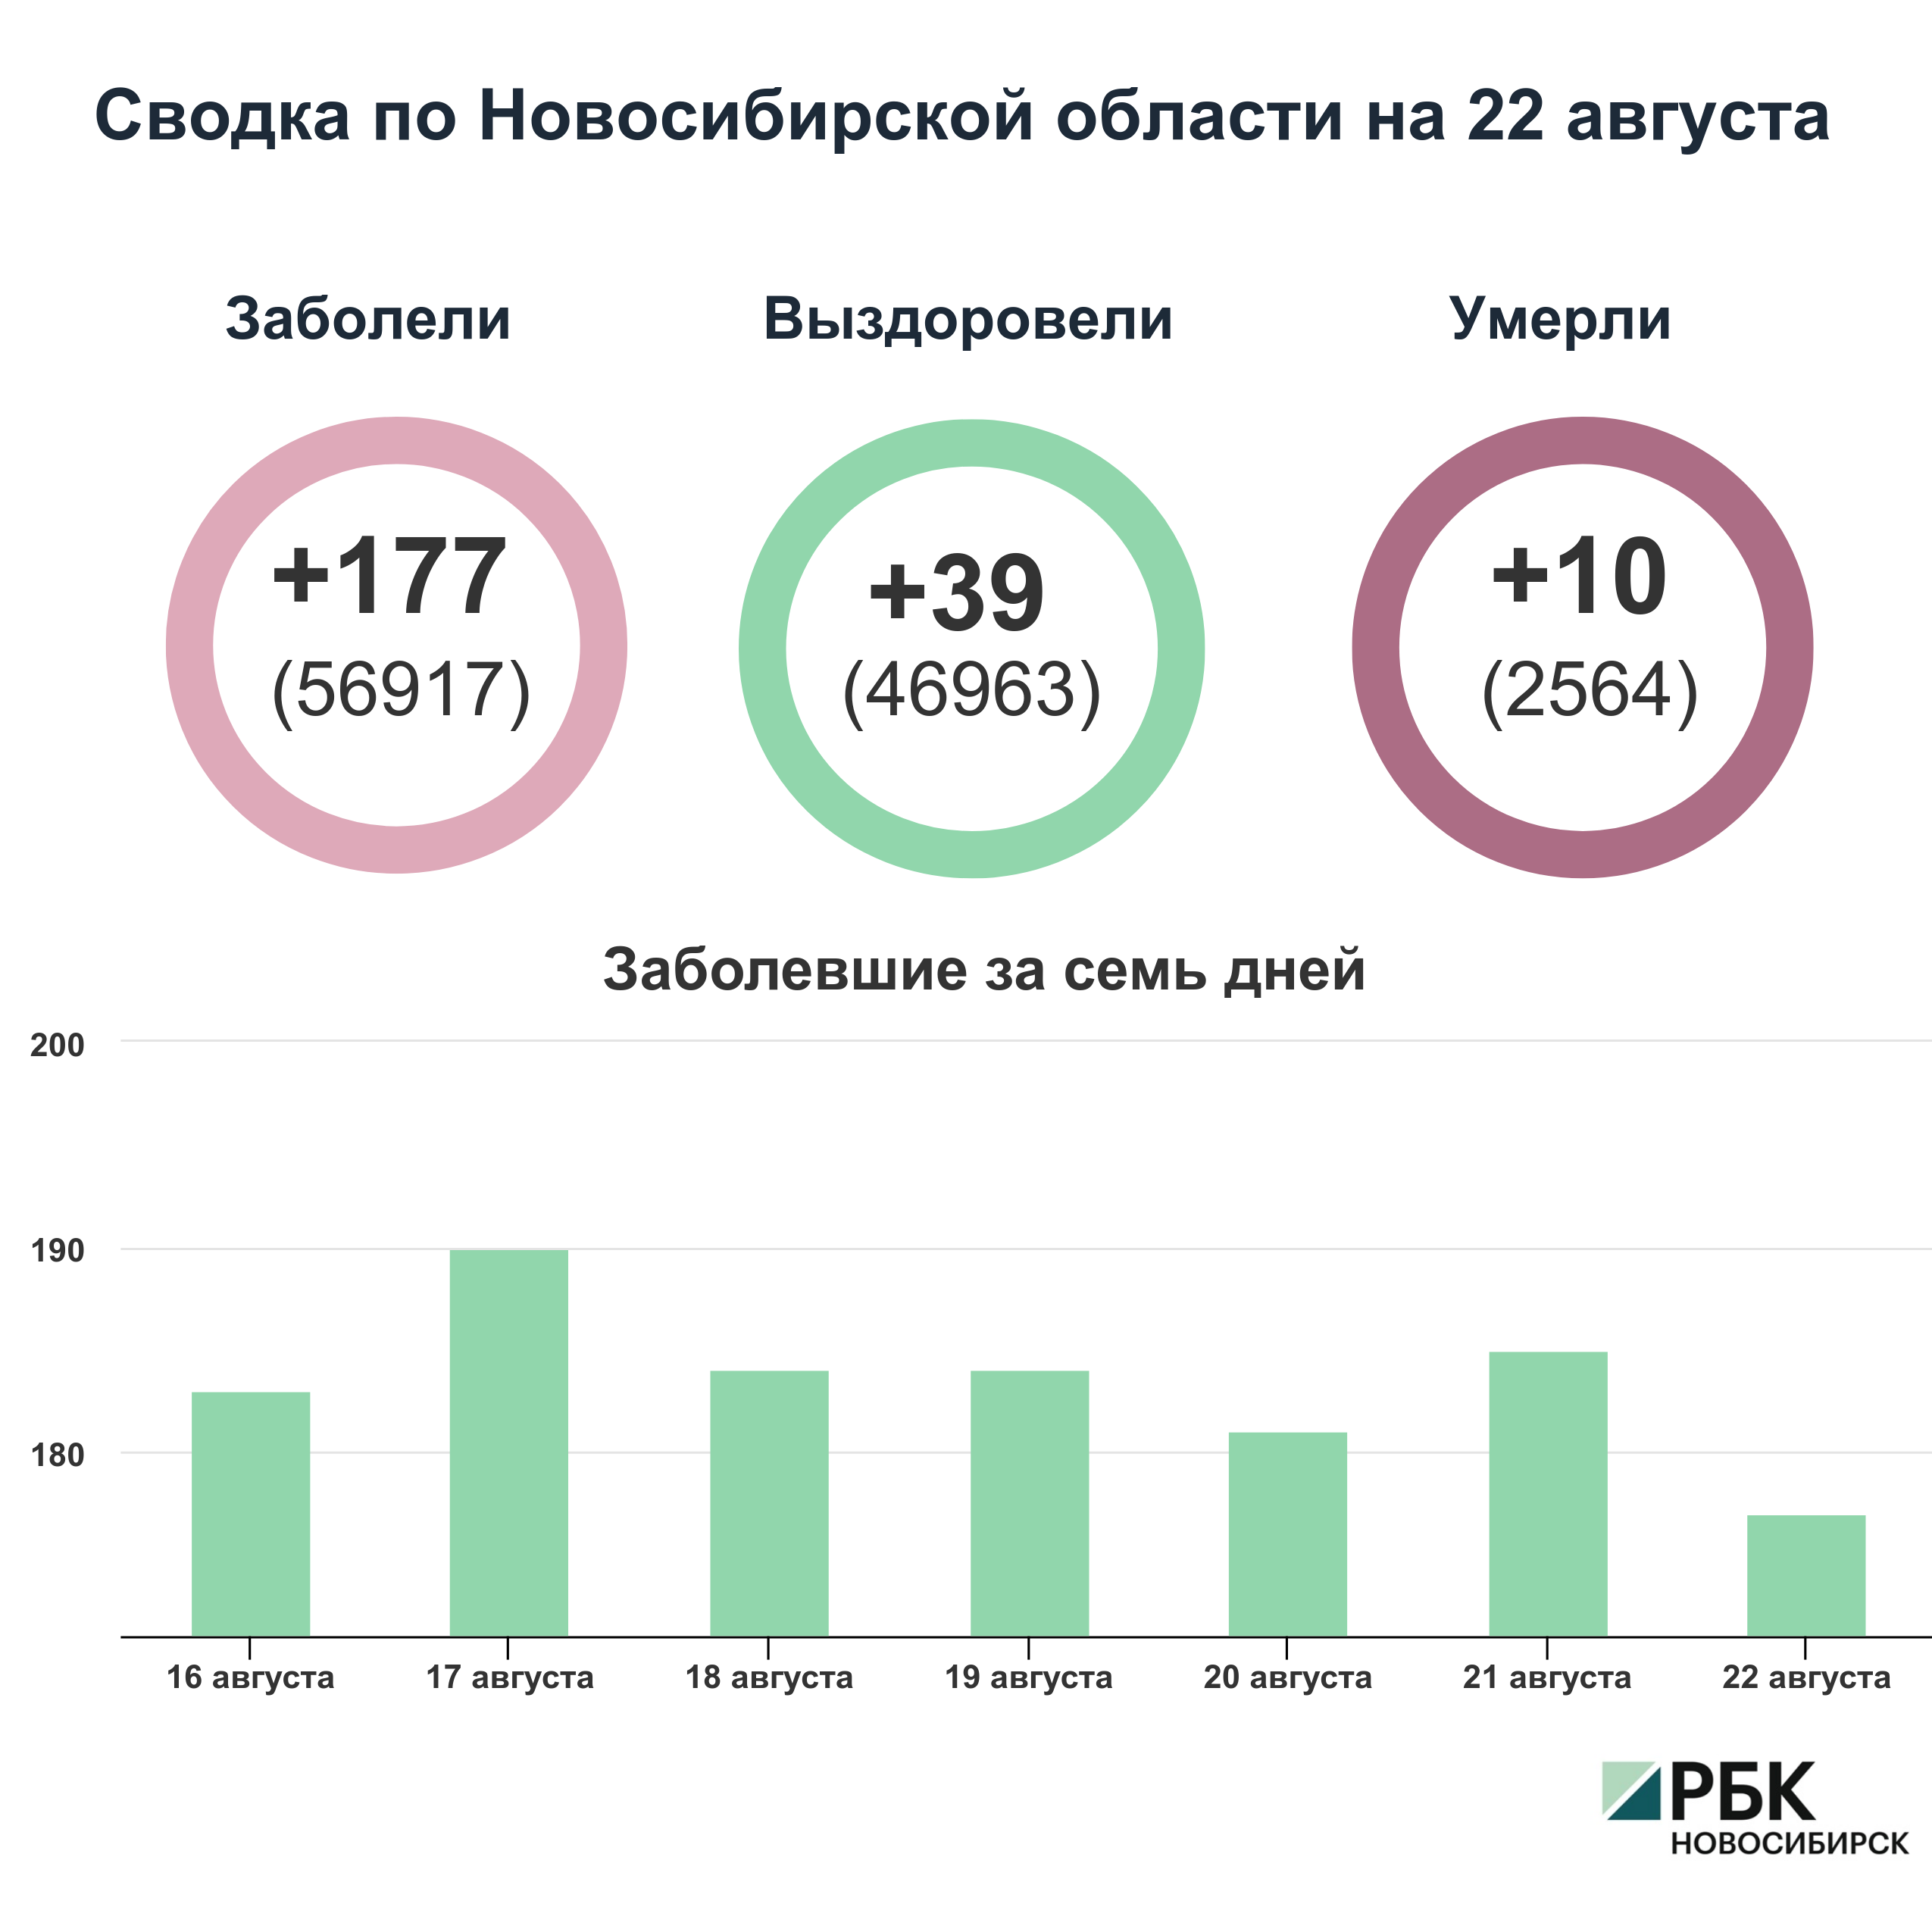 Коронавирус в Новосибирске: сводка на 22 августа